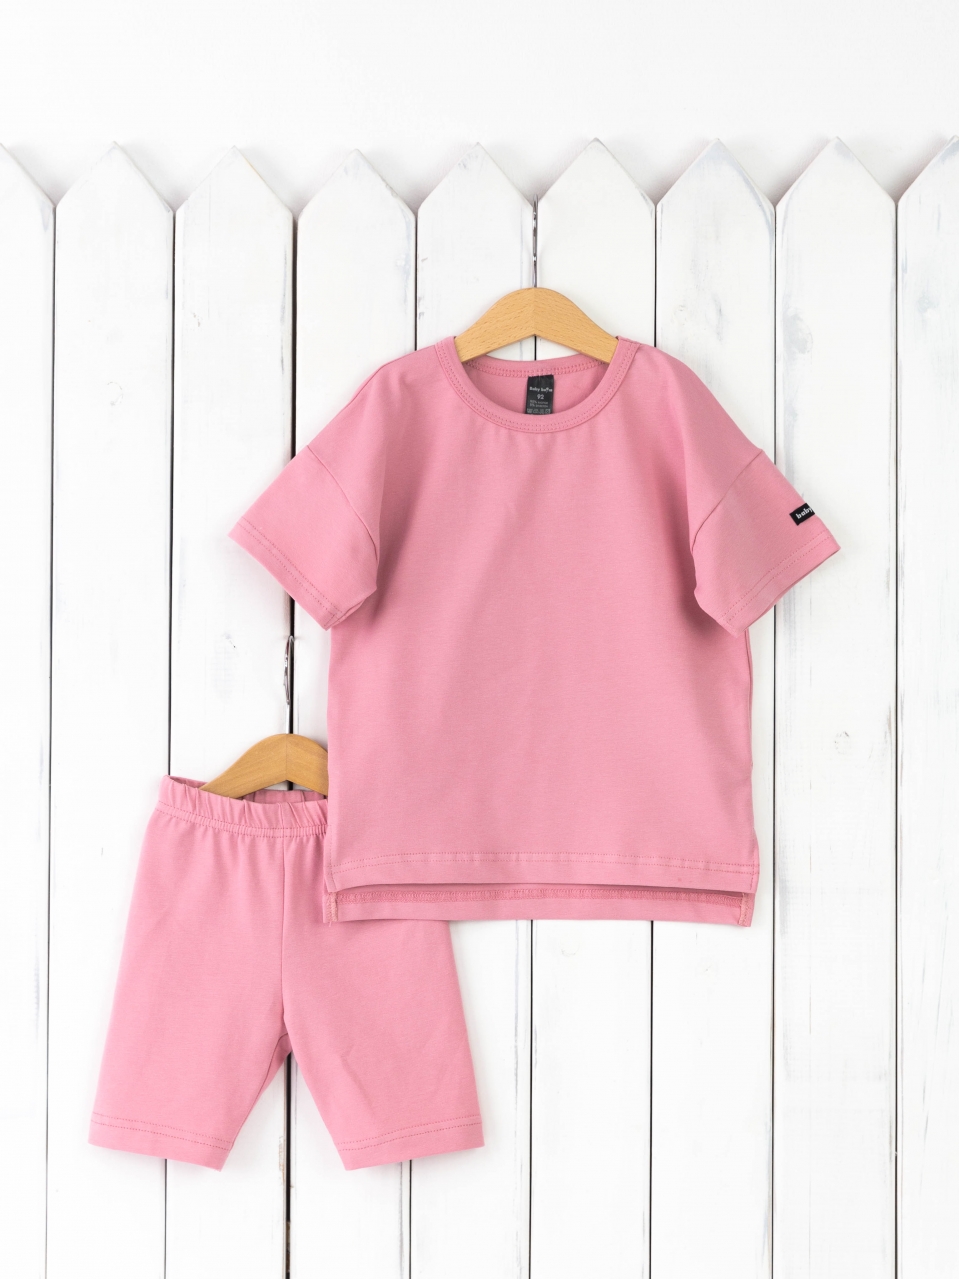 КД416/9-К Комплект детский р.116 футболка+легинсы/розовый зефир Бэби Бум - Оренбург 